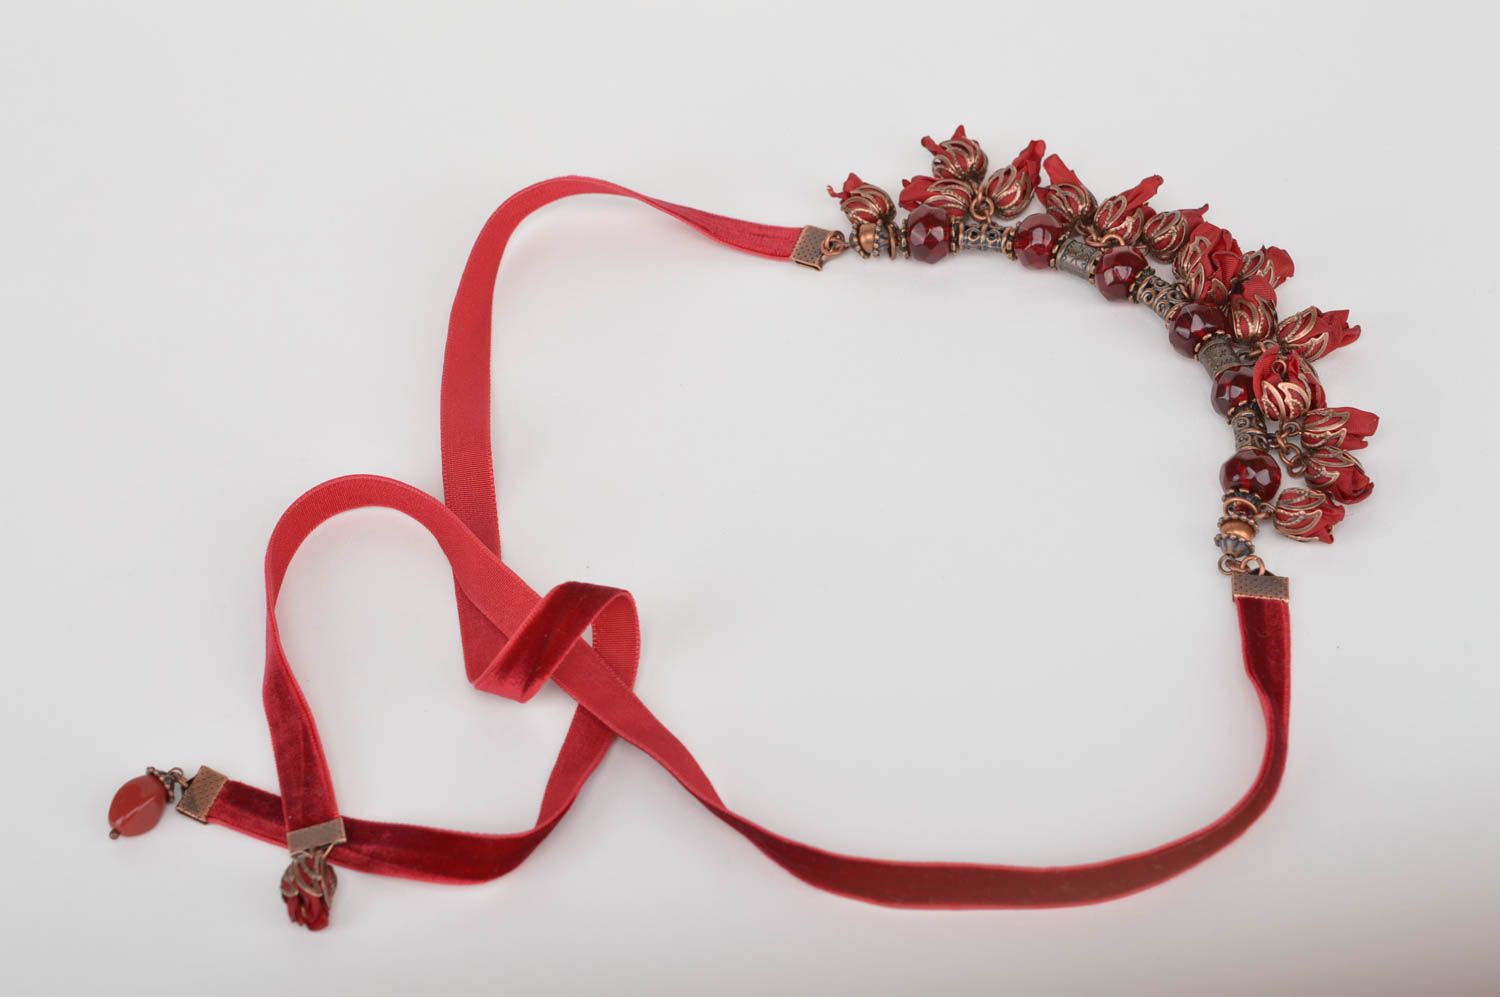 Designer handmade necklace stylish red accessories unusual interesting jewelry photo 5